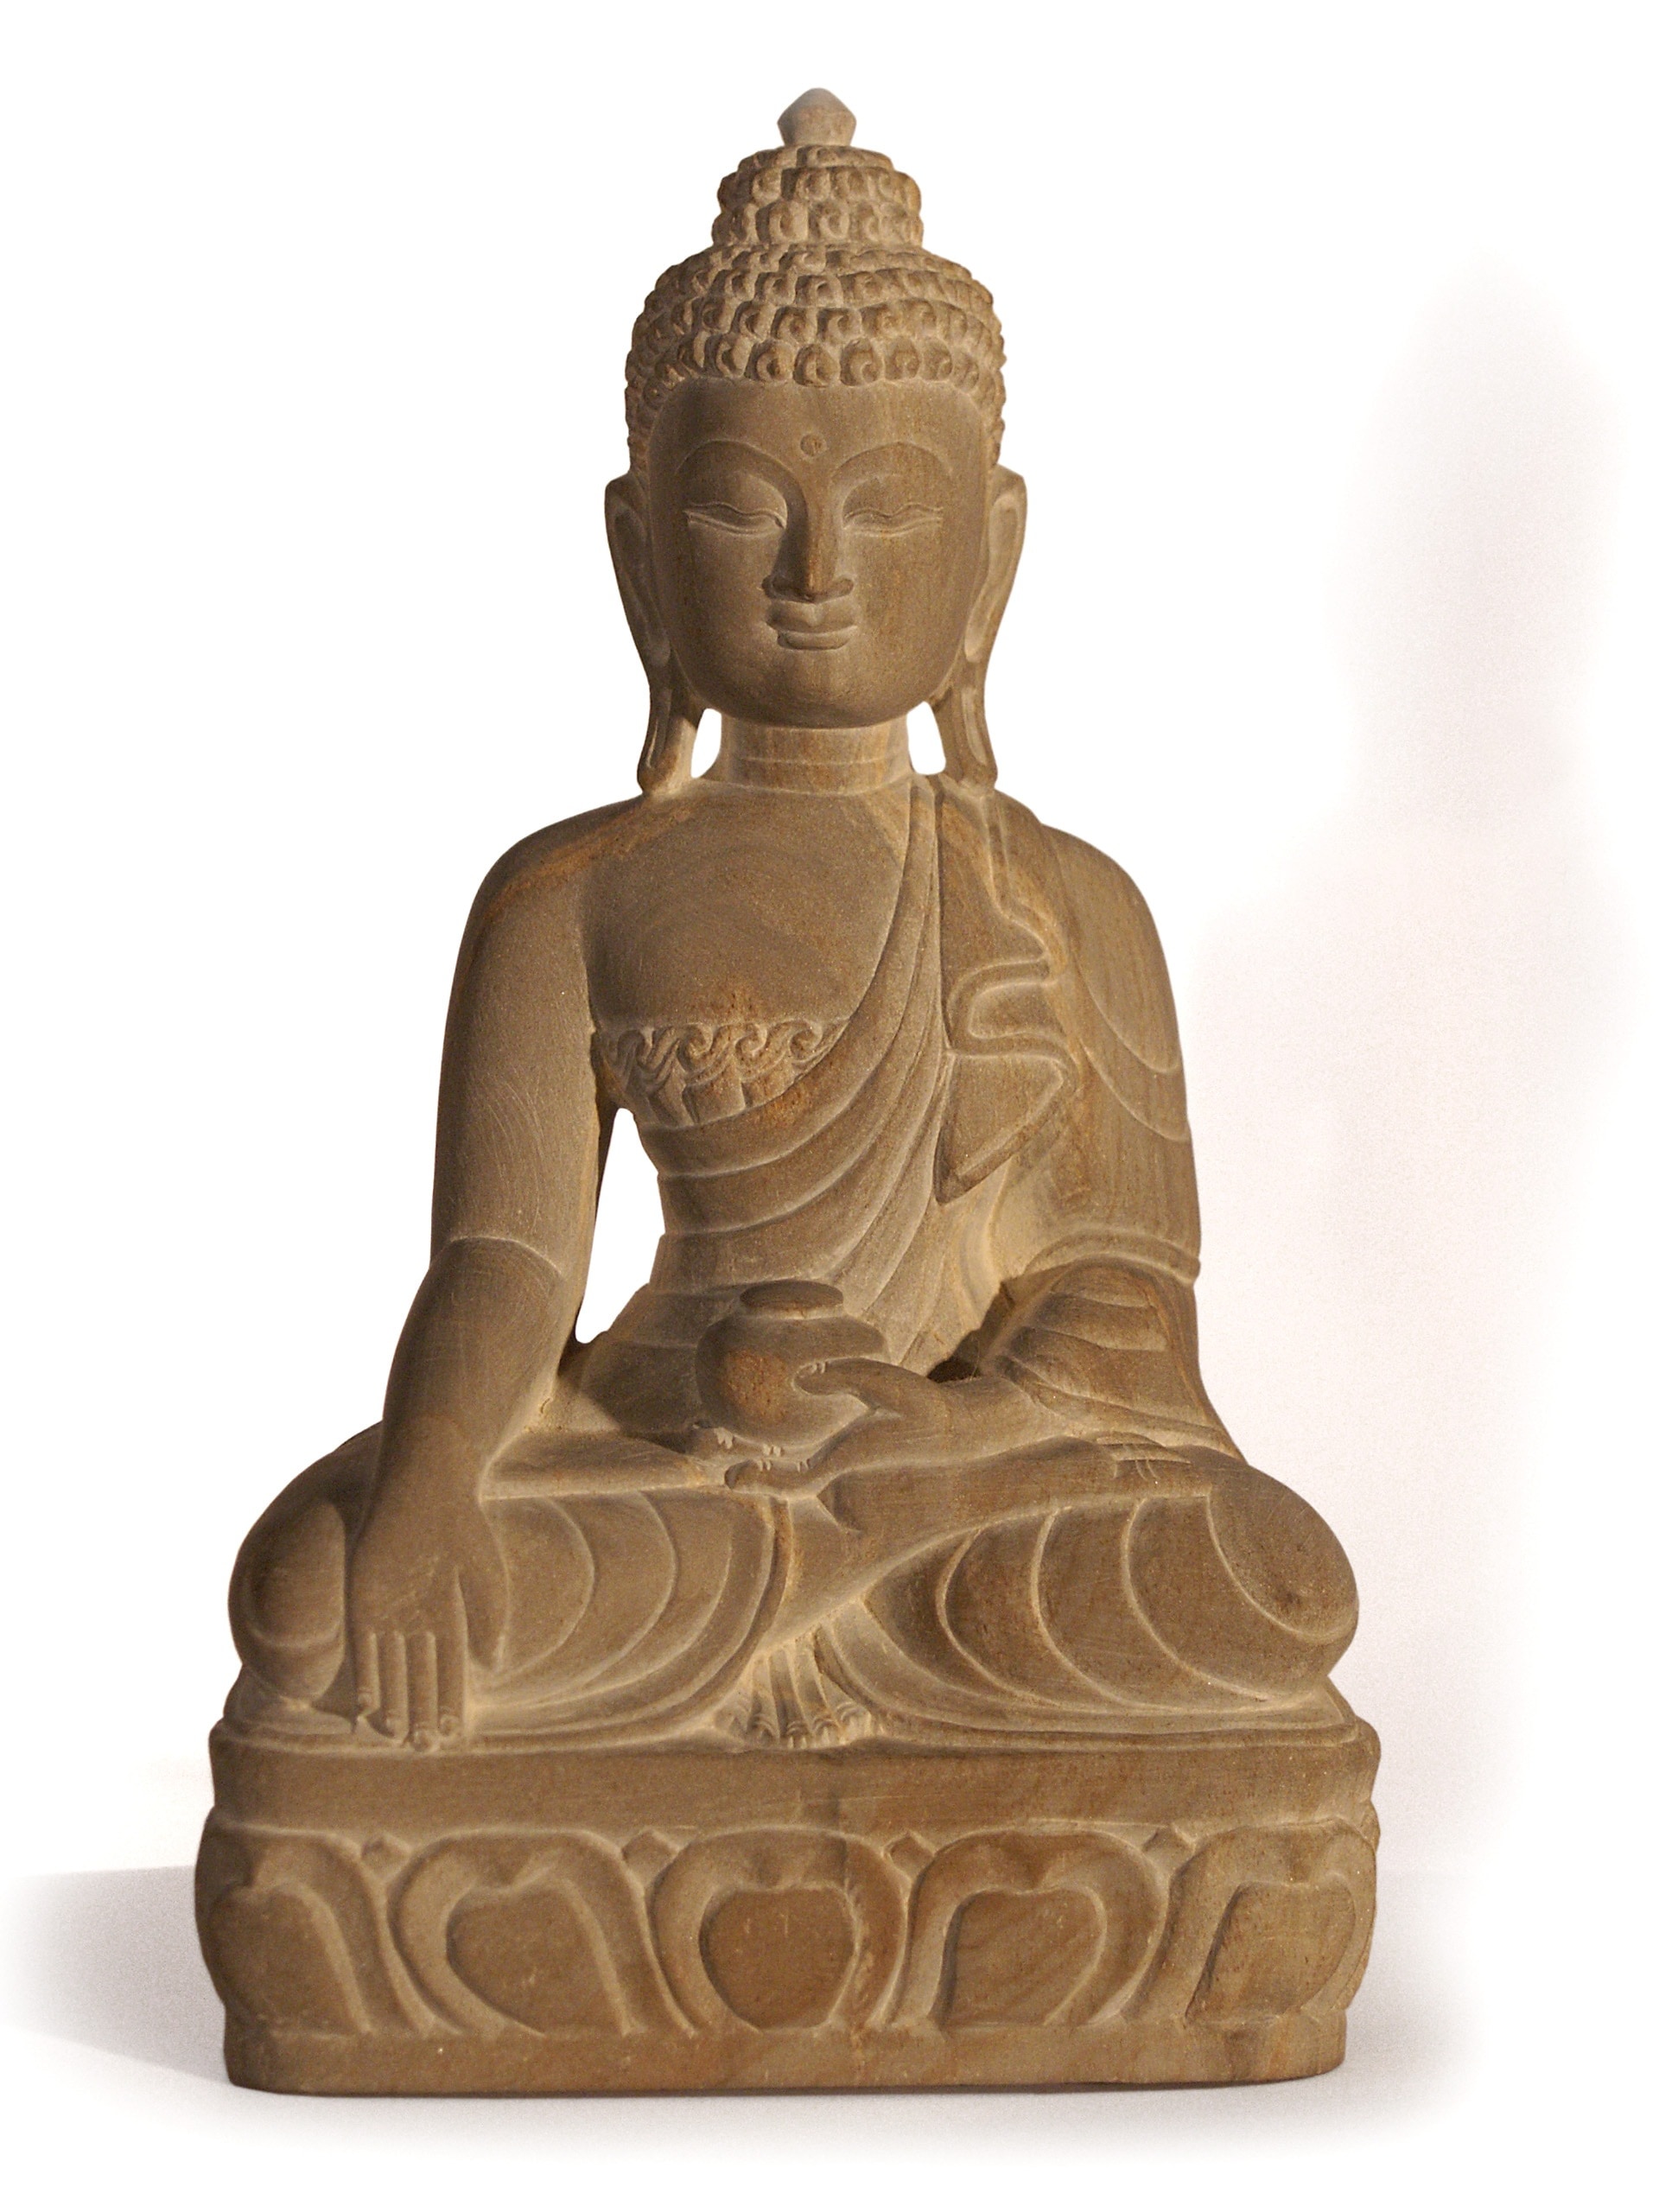 Enlightenment, The Buddha, Maitreya, religion, statue